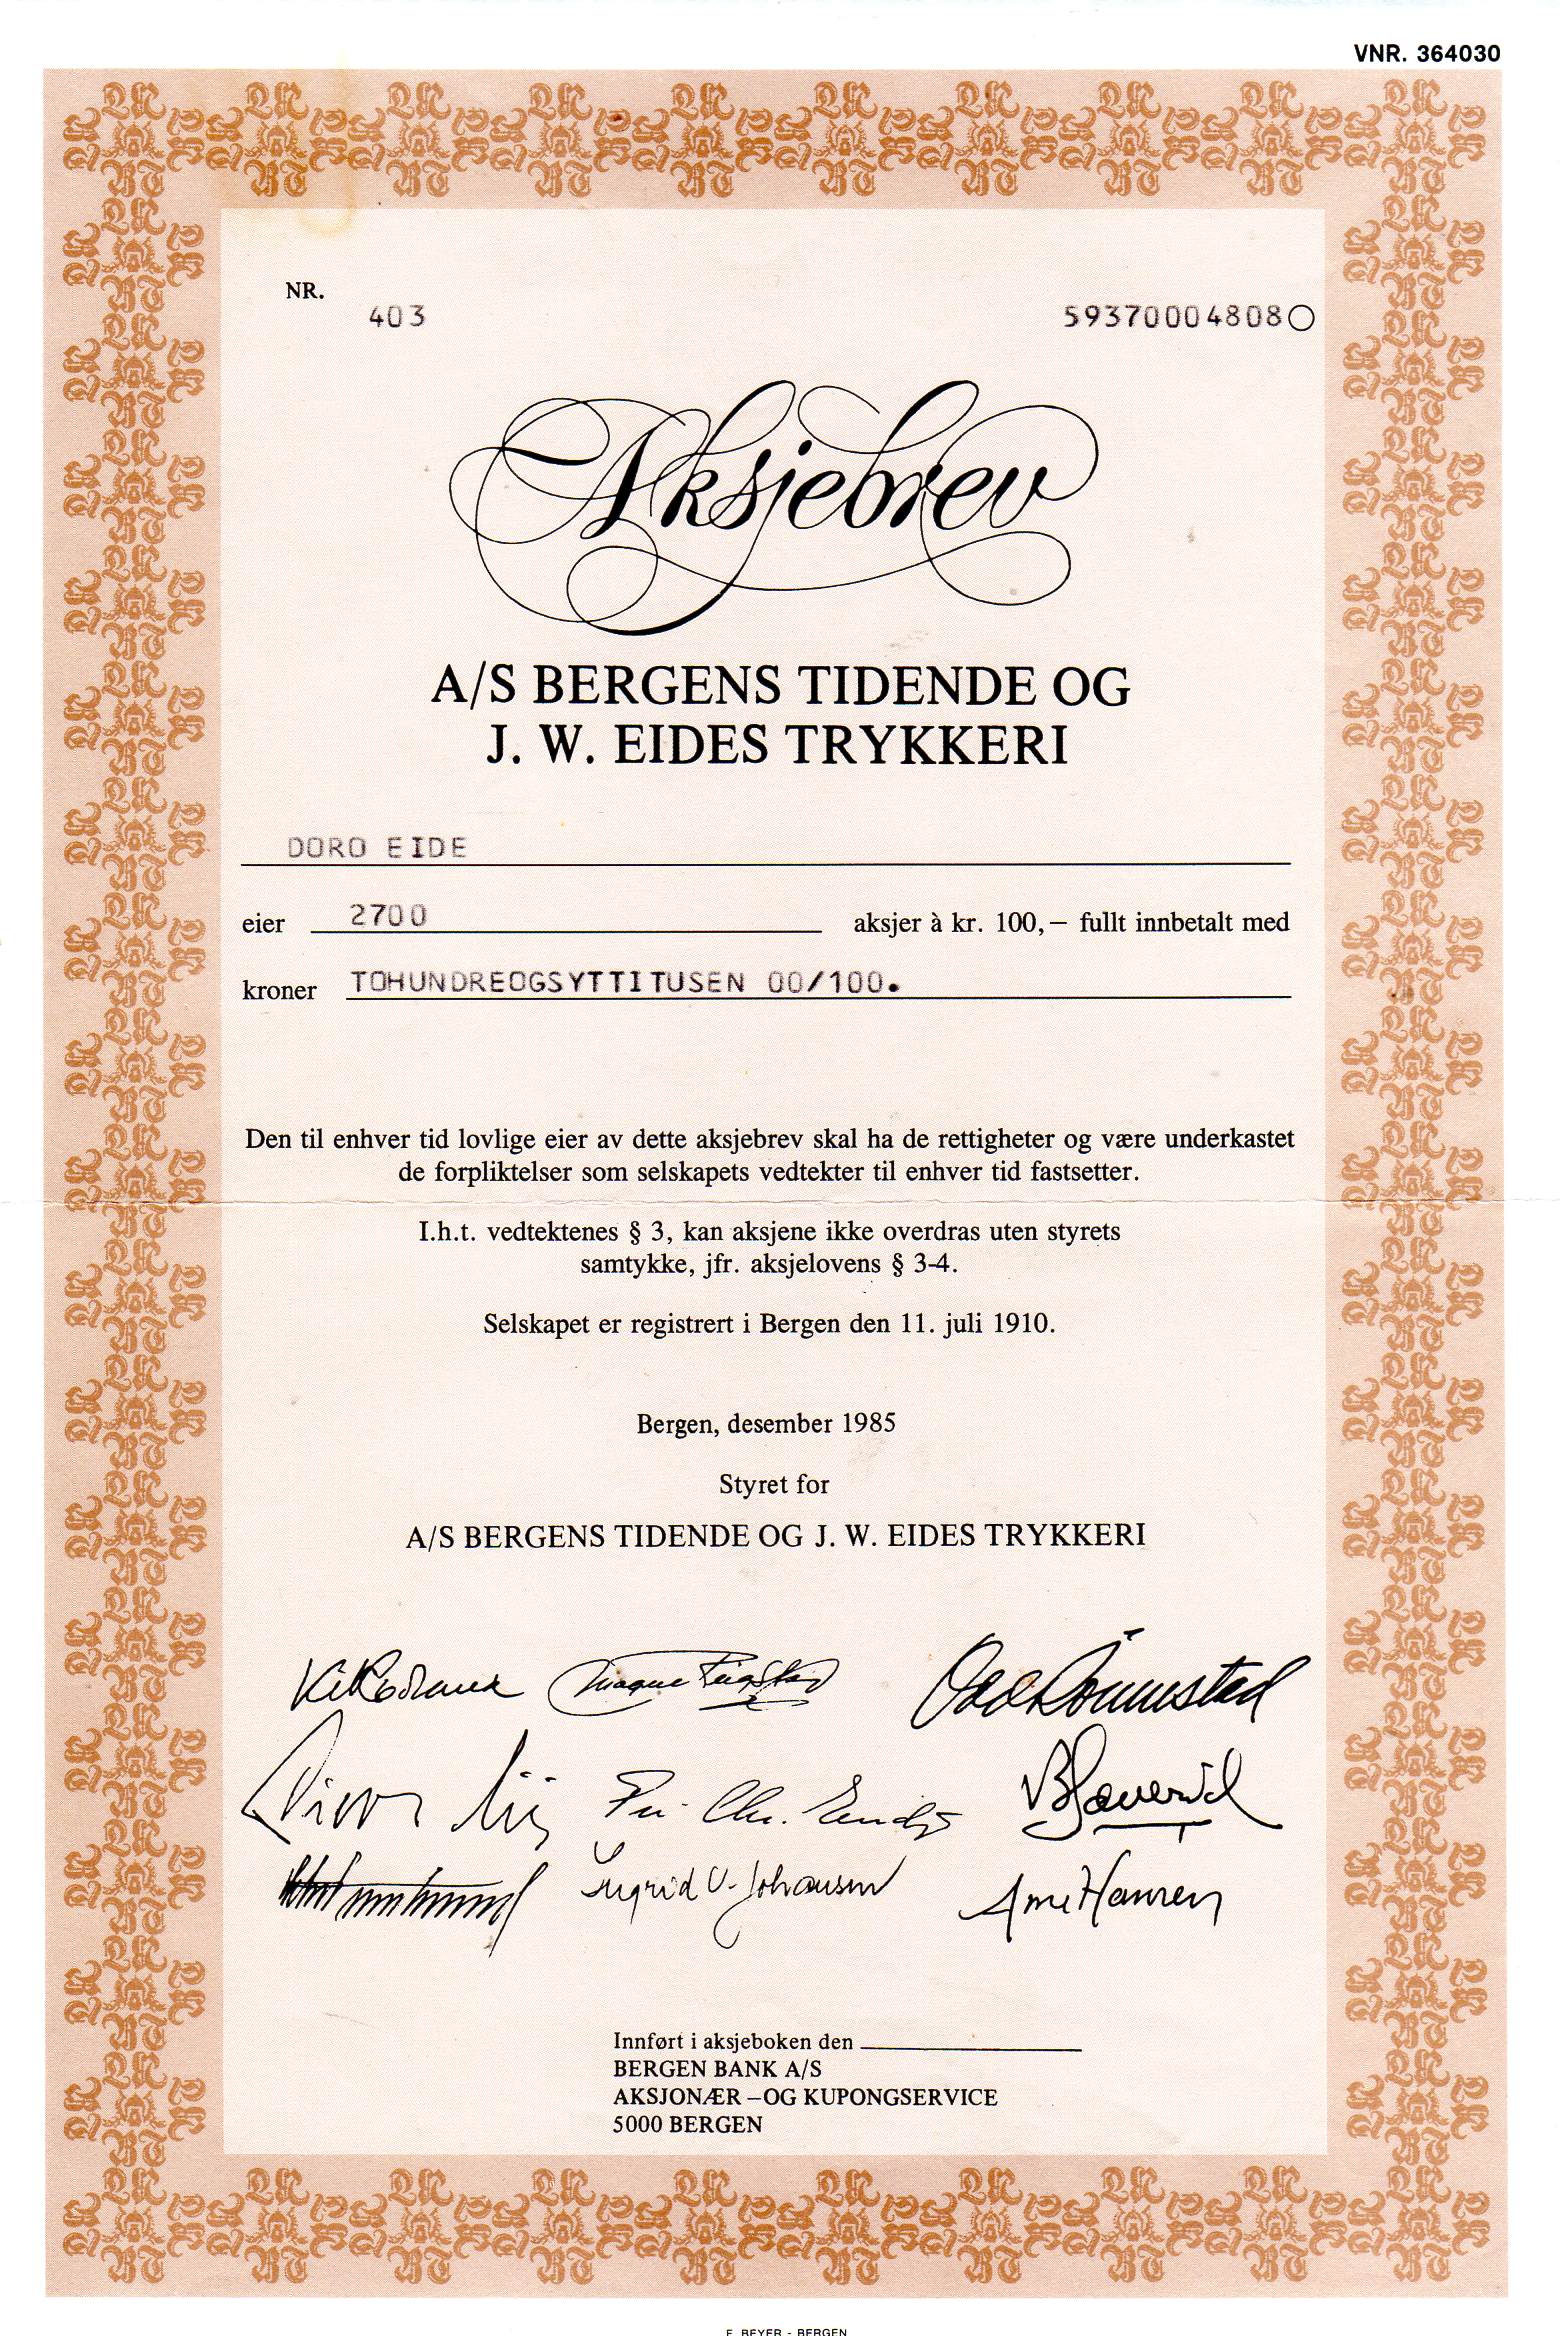 Bergens tidende/Eides trykkeri kr 100 Bergen 1985 nr 163/403/453/4093/4202/4008 pris pr stk